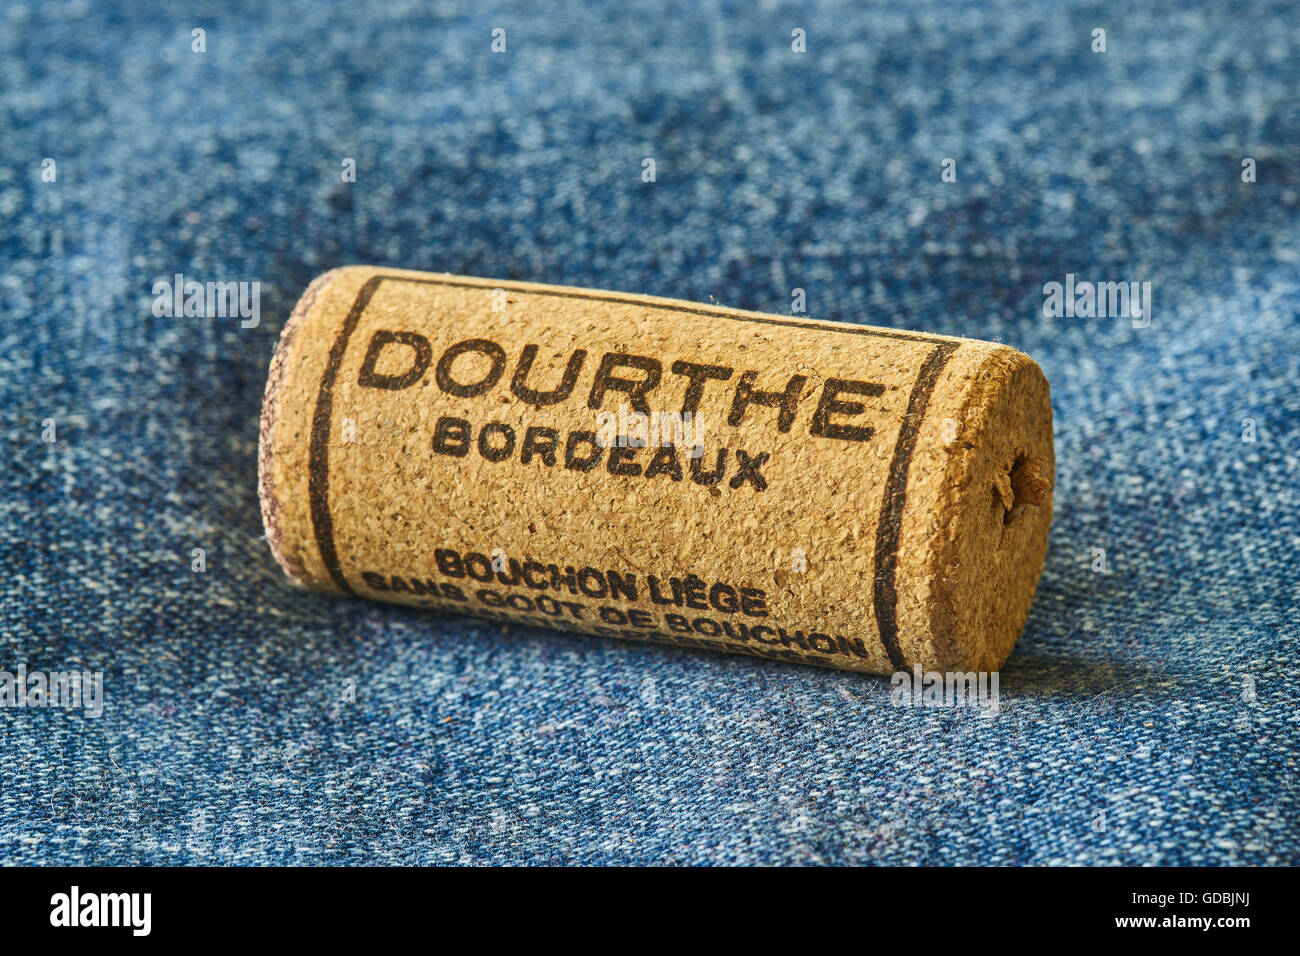 Dourthe Bordeaux French wine cork stopper Stock Photo